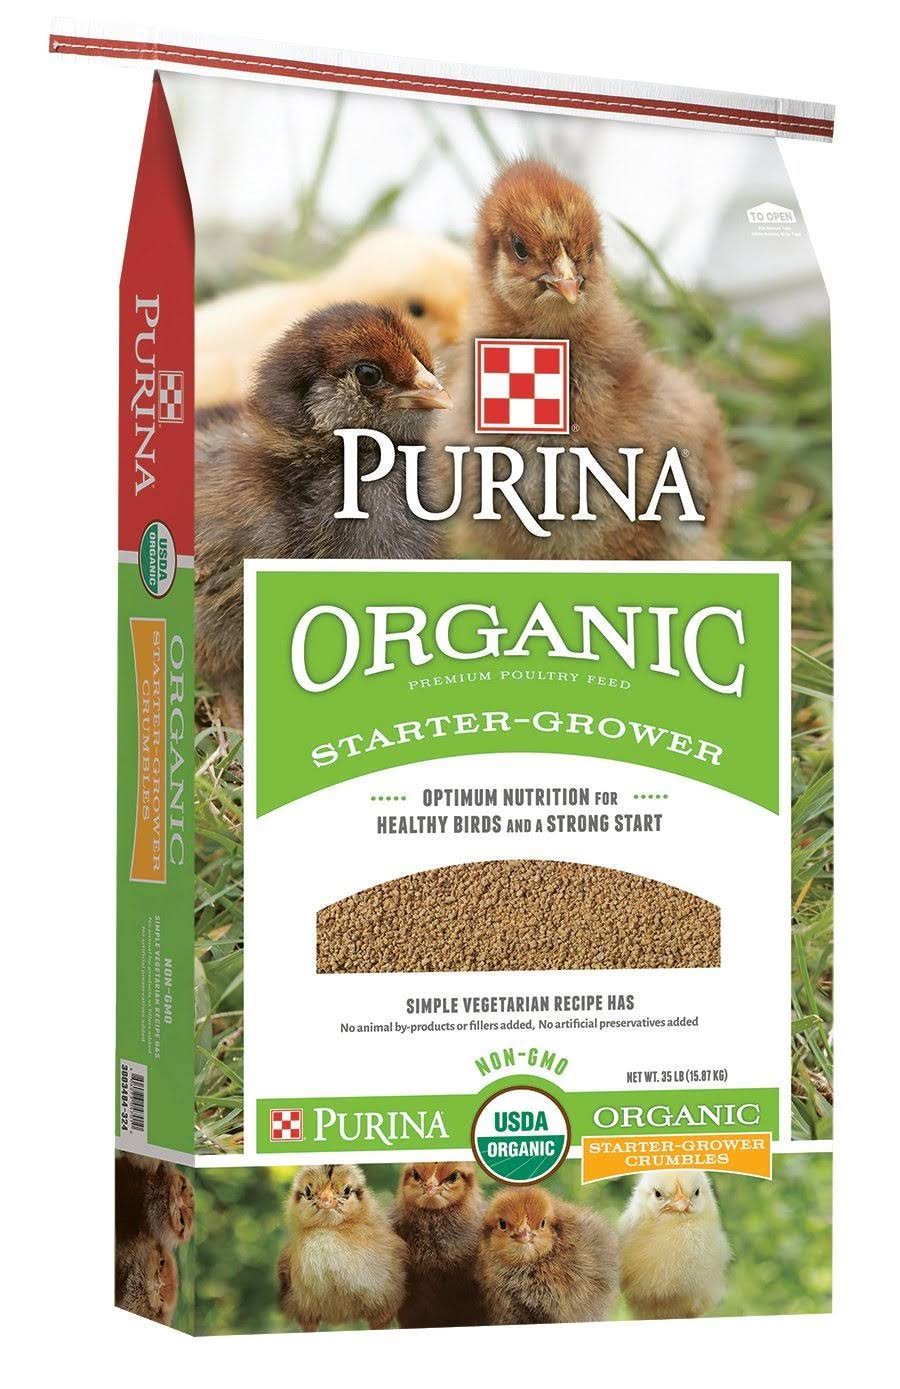 Purina Organic Starter-Grower 35 lb